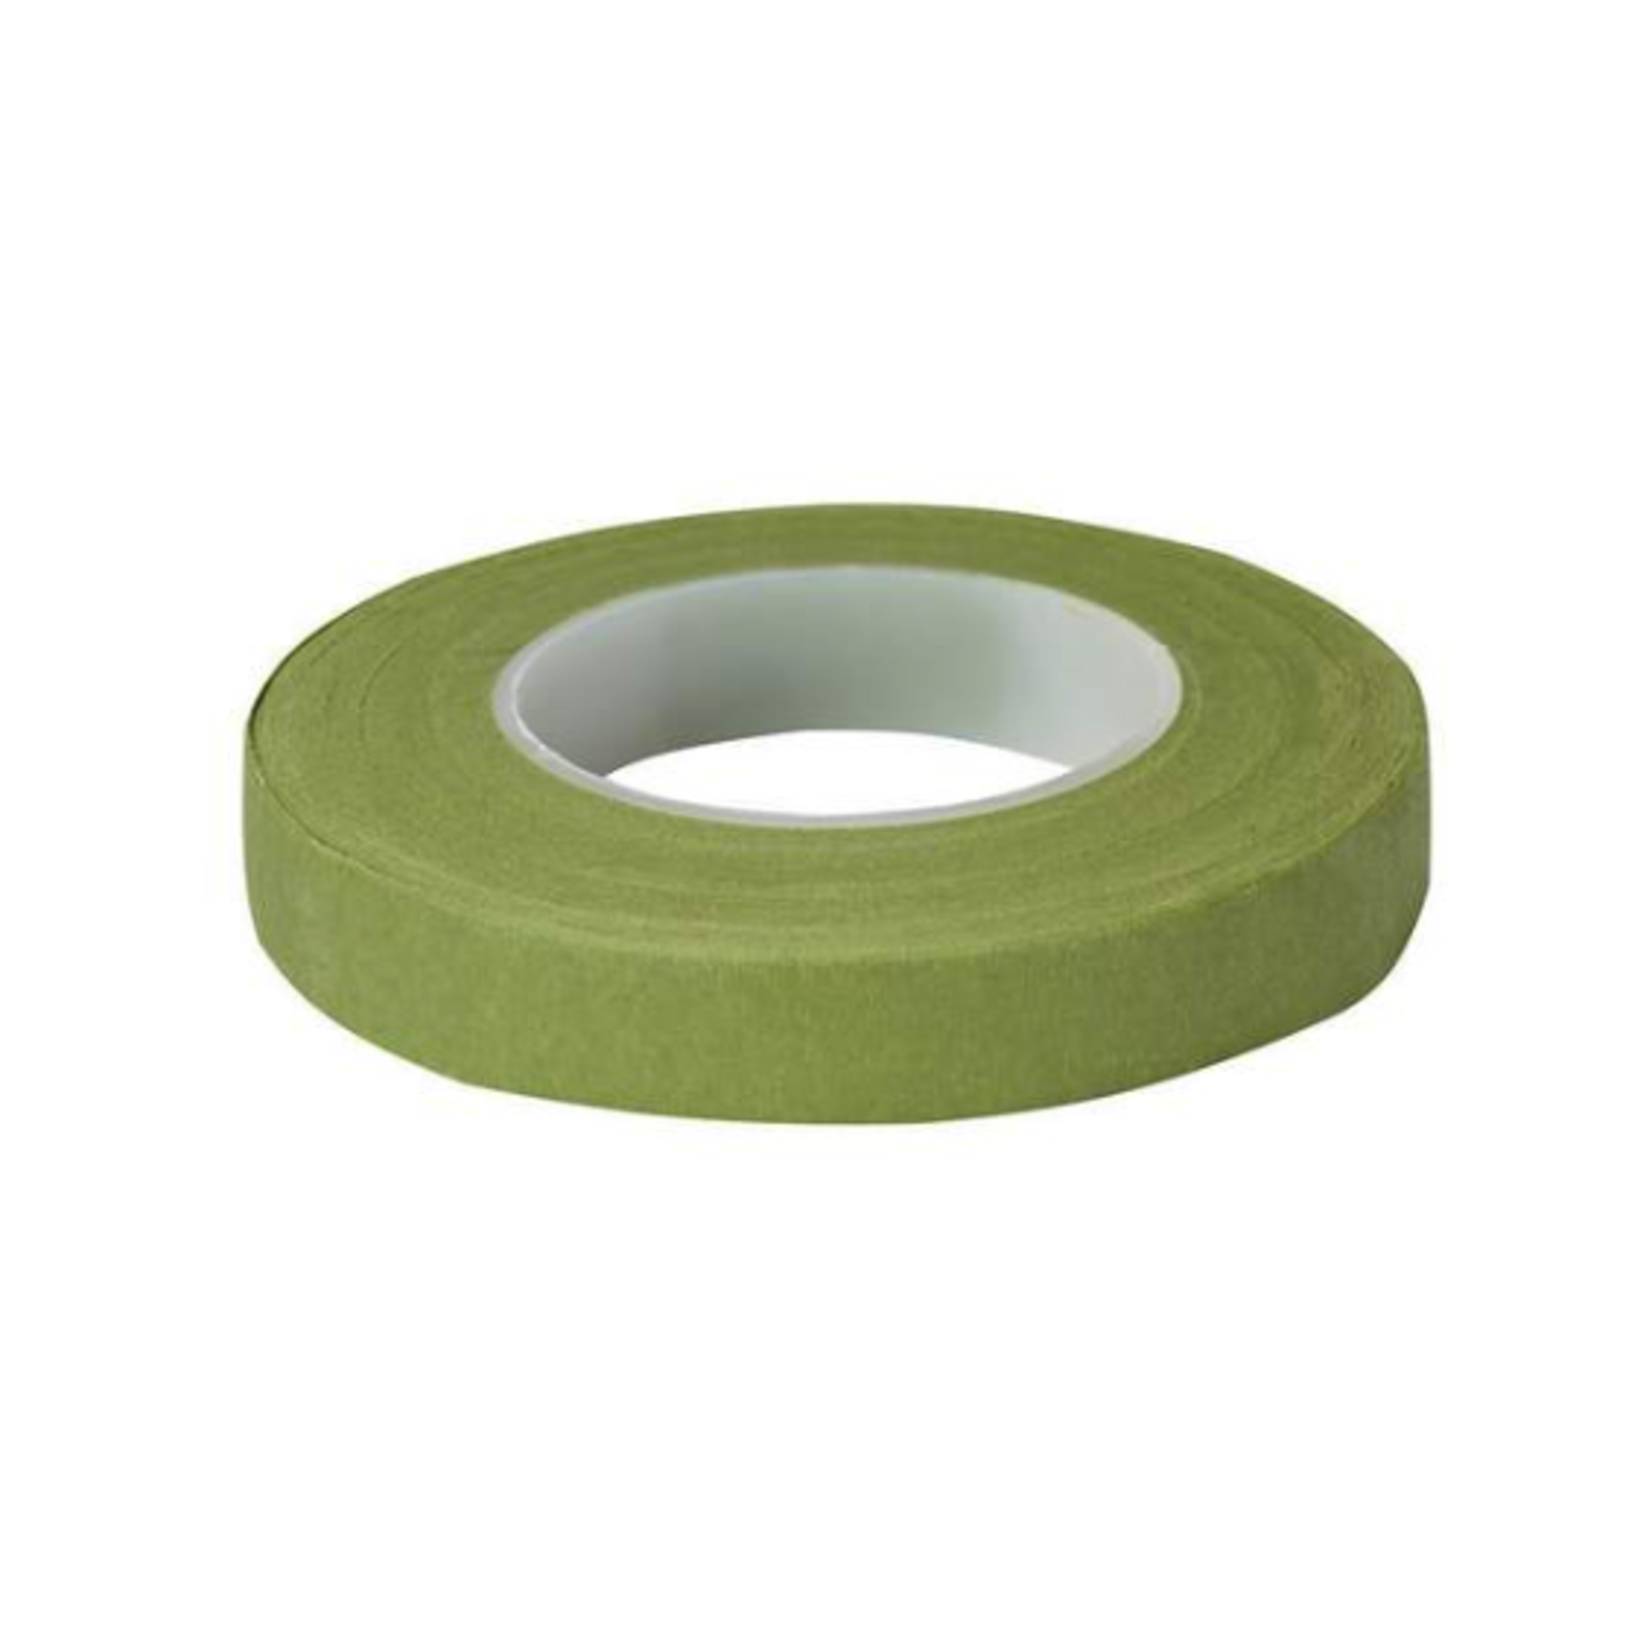 1/2" x 60' Light Green Stem Wrap - Floral Tape, Corsage Tape